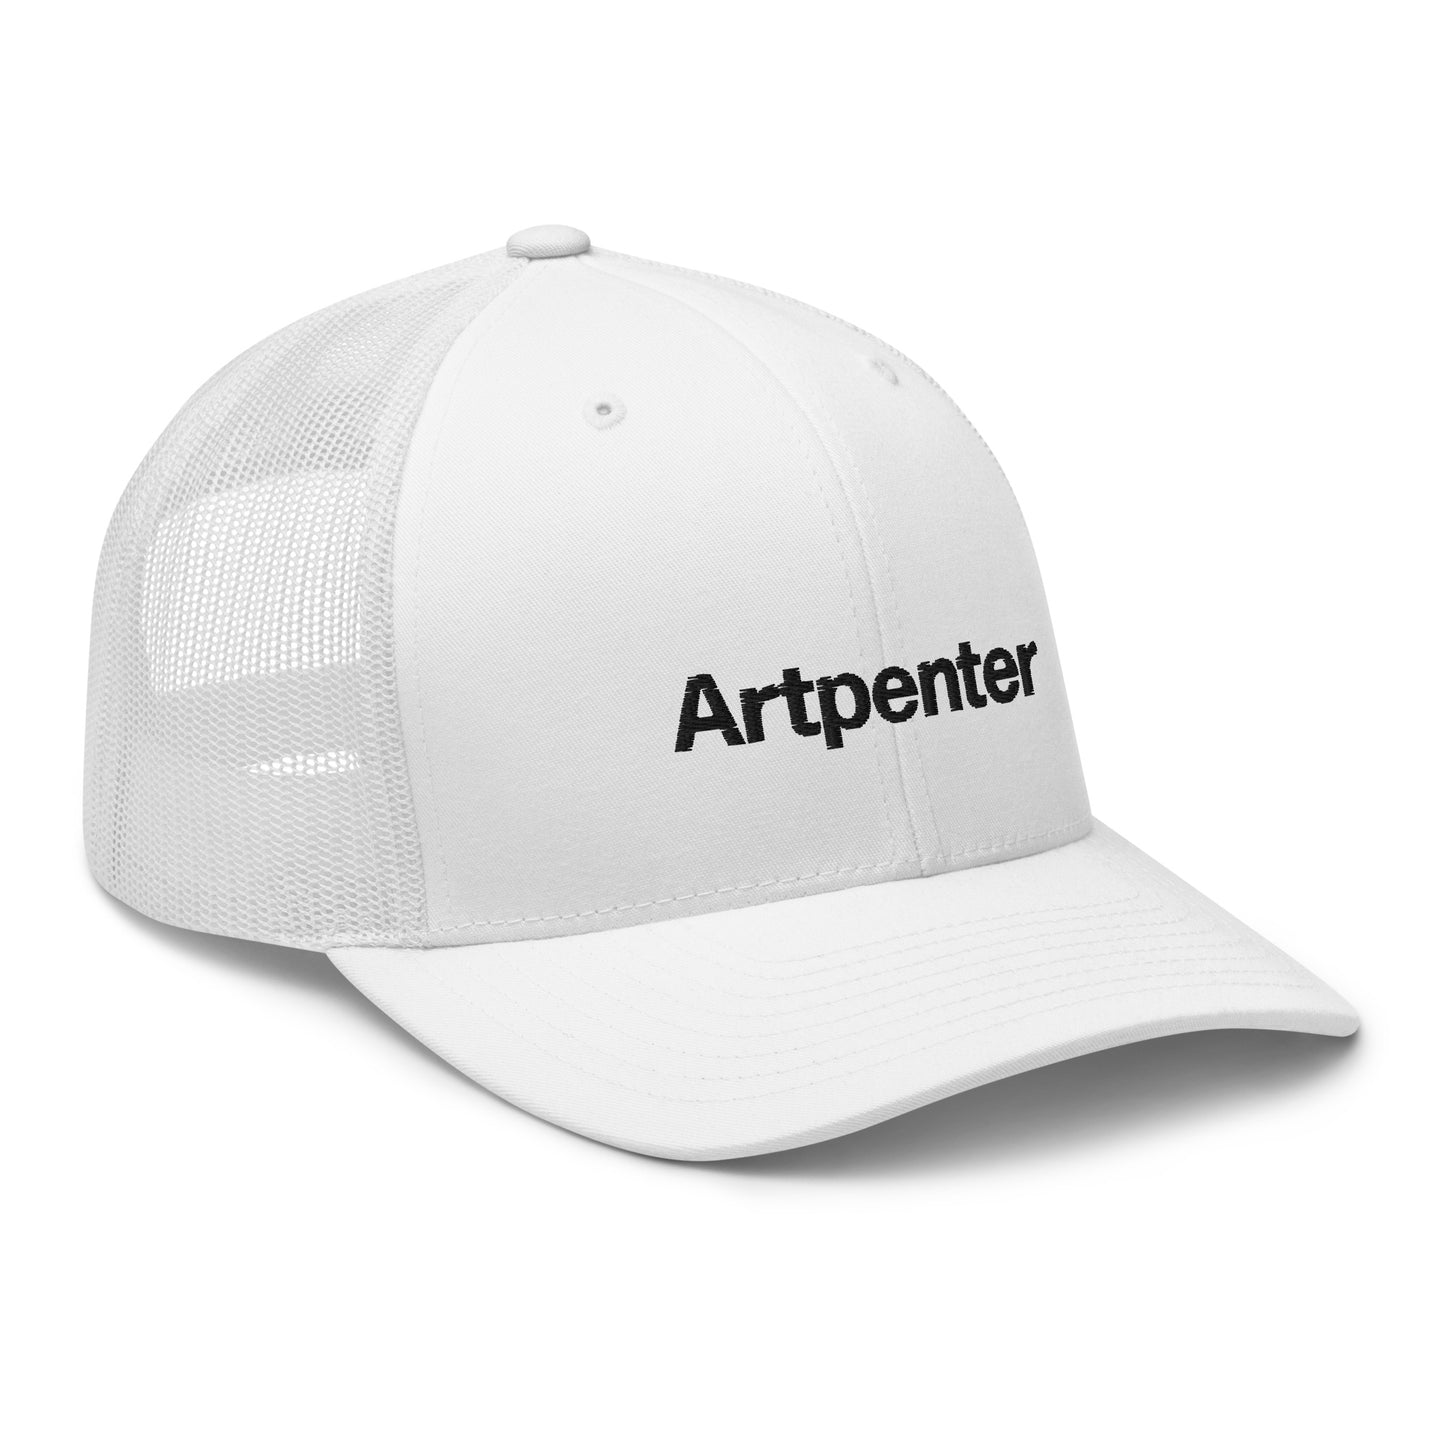 artpenter - trucker hat